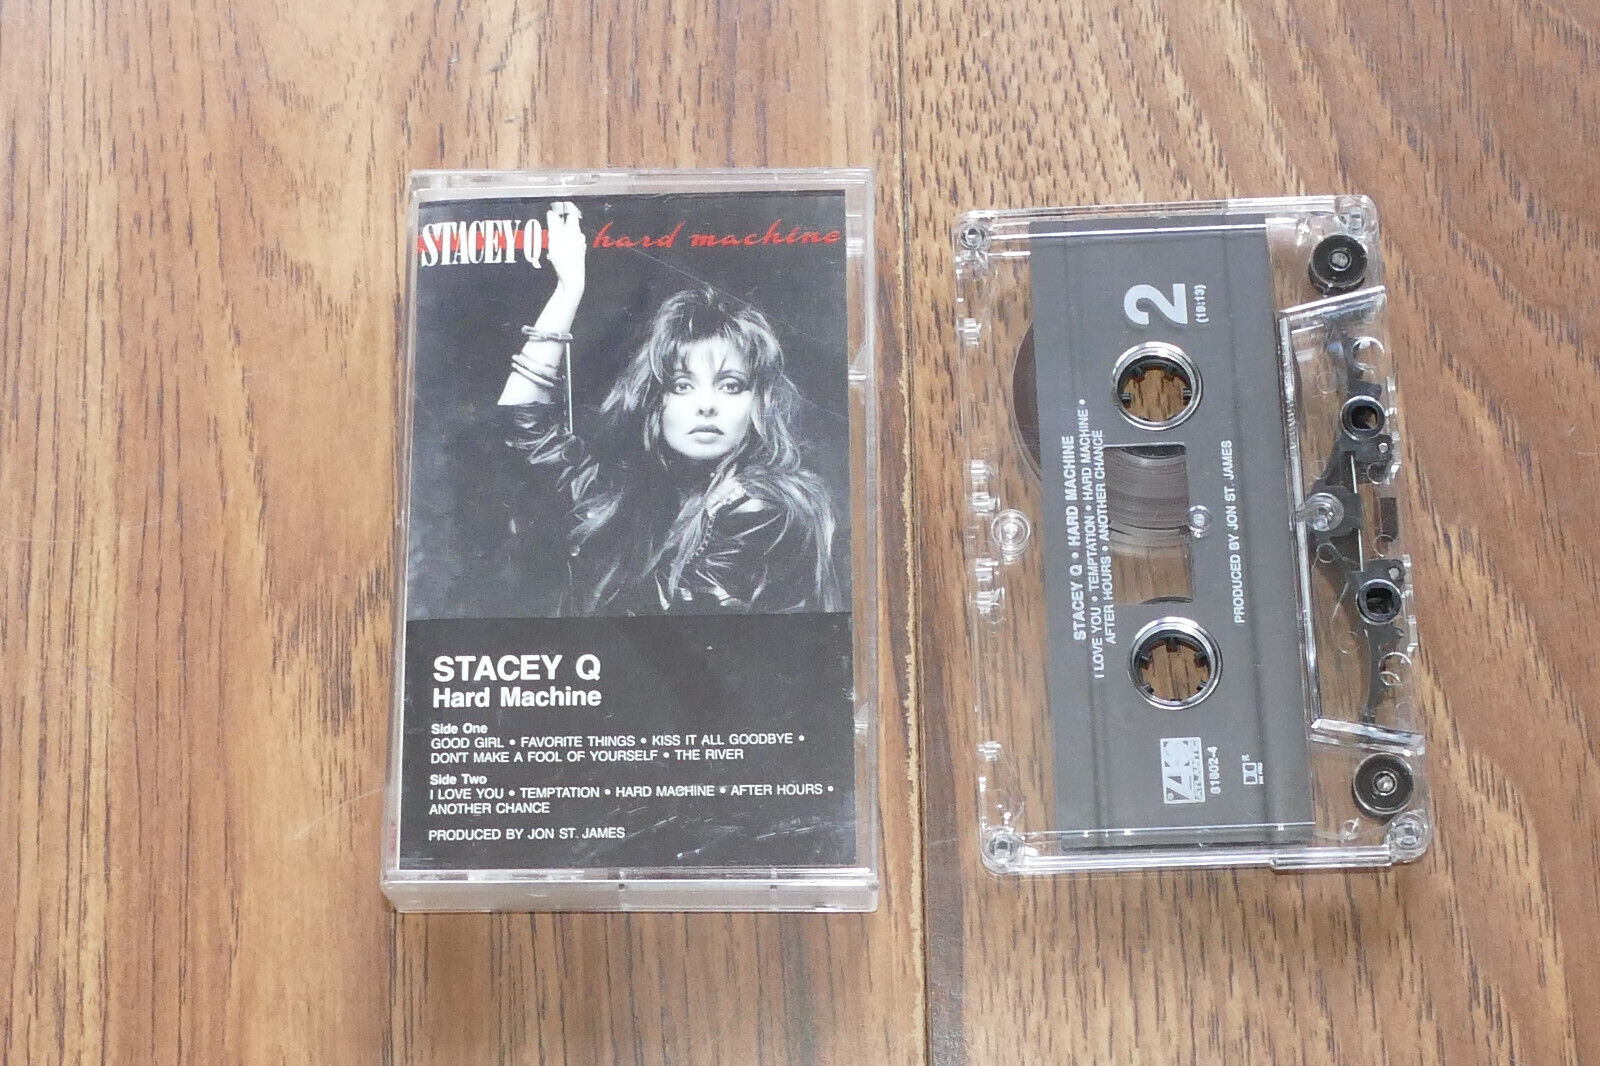 Stacey Q, Hard Machine - 1988 Cassette - Test Played